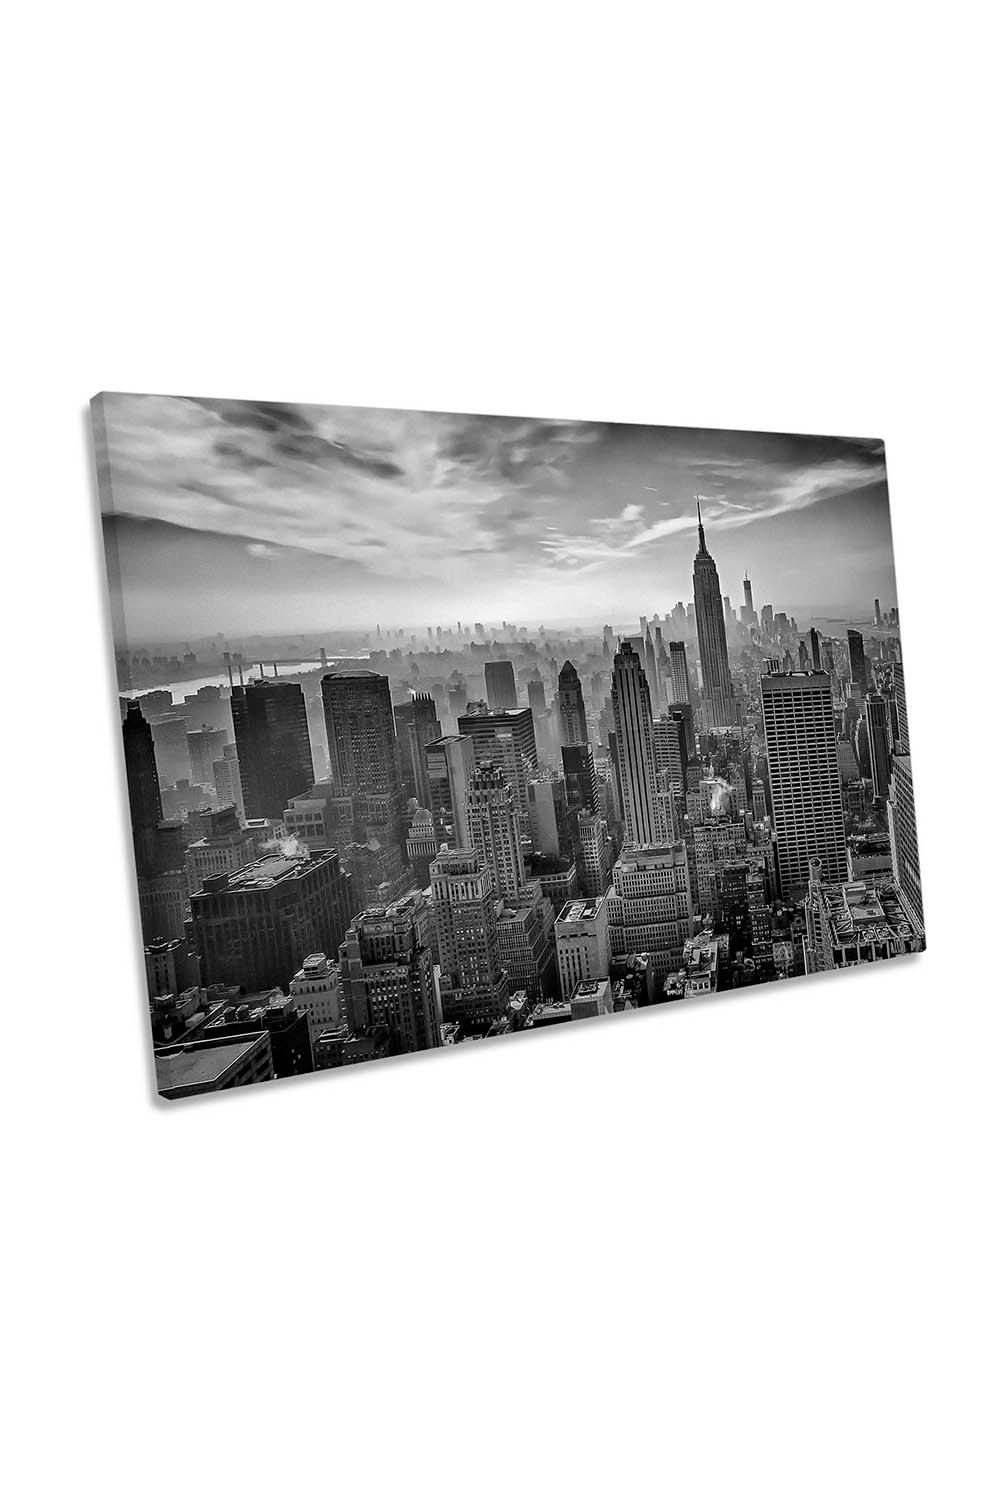 Hazy Gotham New York City Canvas Wall Art Picture Print